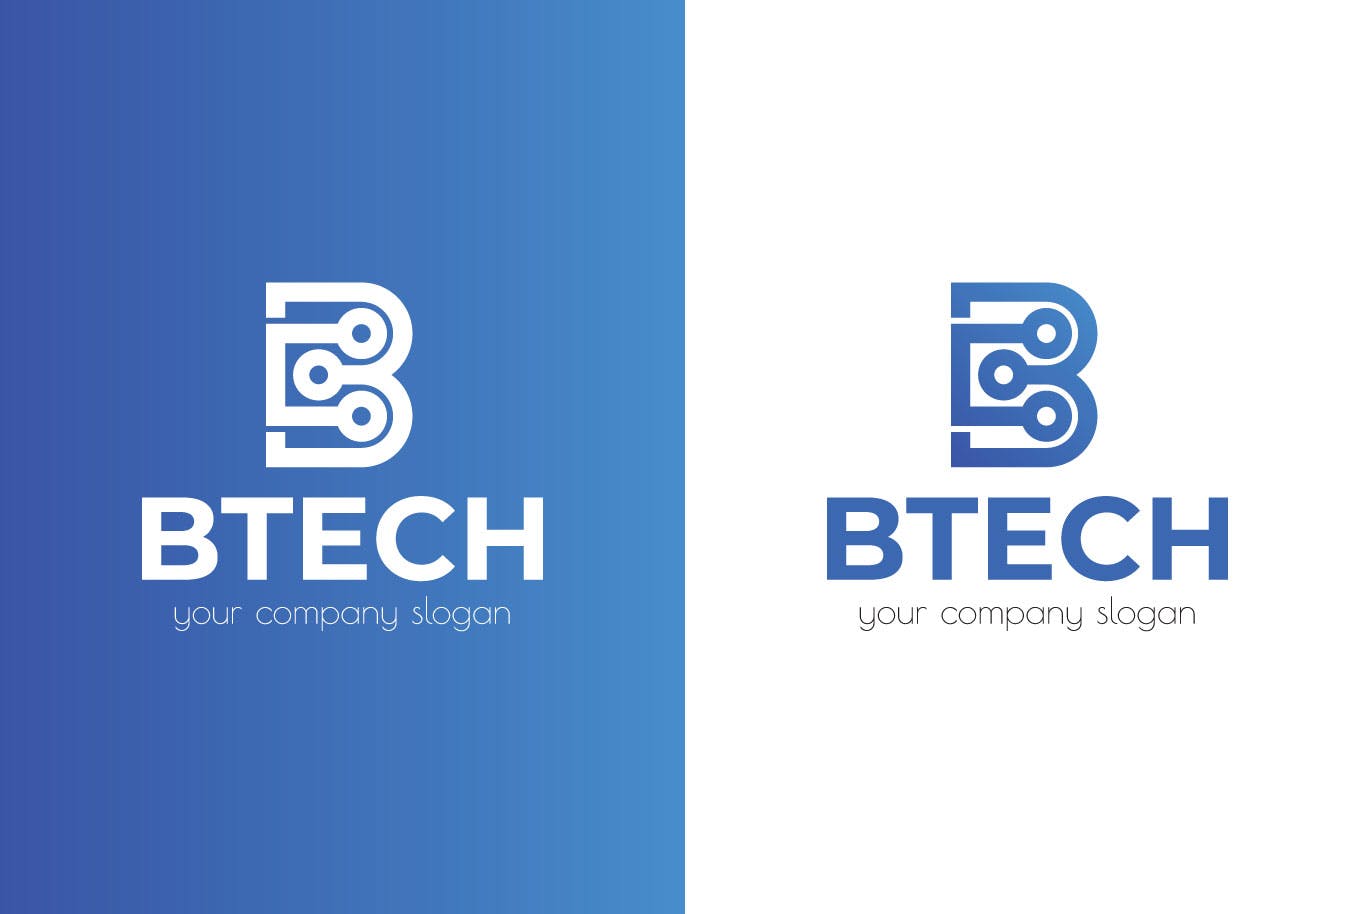 基于B字母图形的企业Logo设计普贤居精选模板 Letter Based Business Logo Template插图(1)